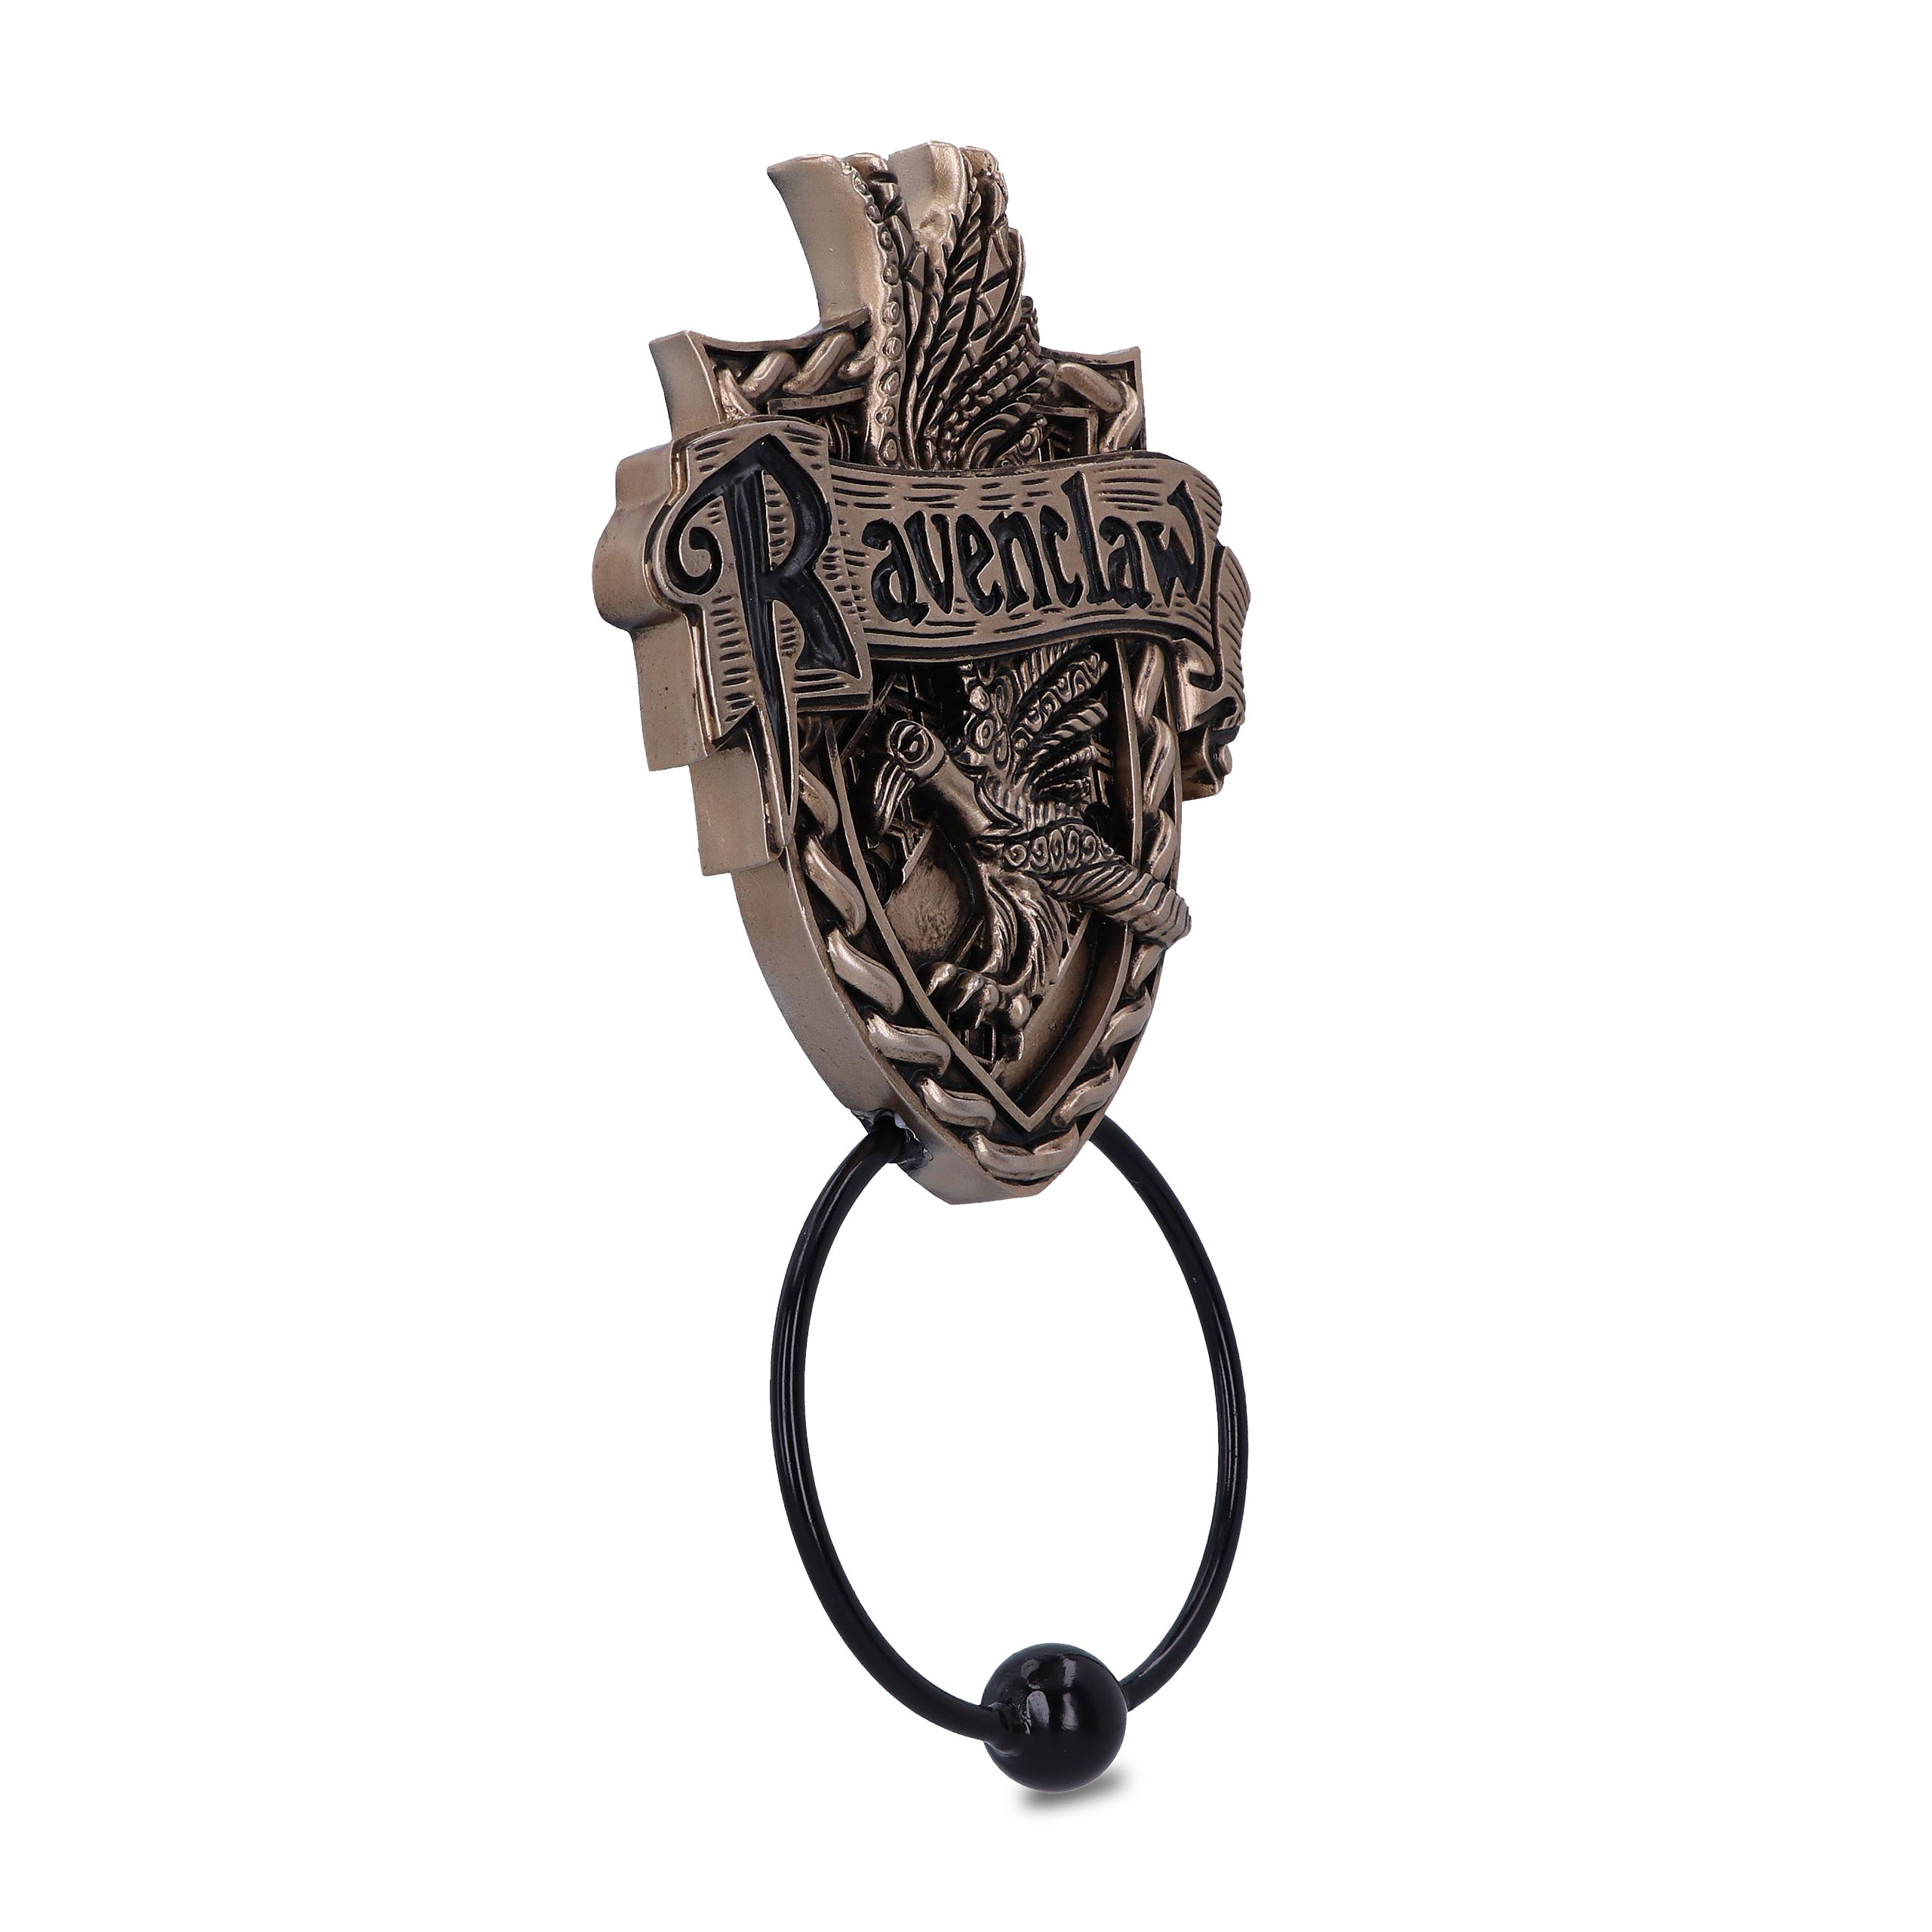 Harry Potter - Ravenclaw Wappen Türklopfer